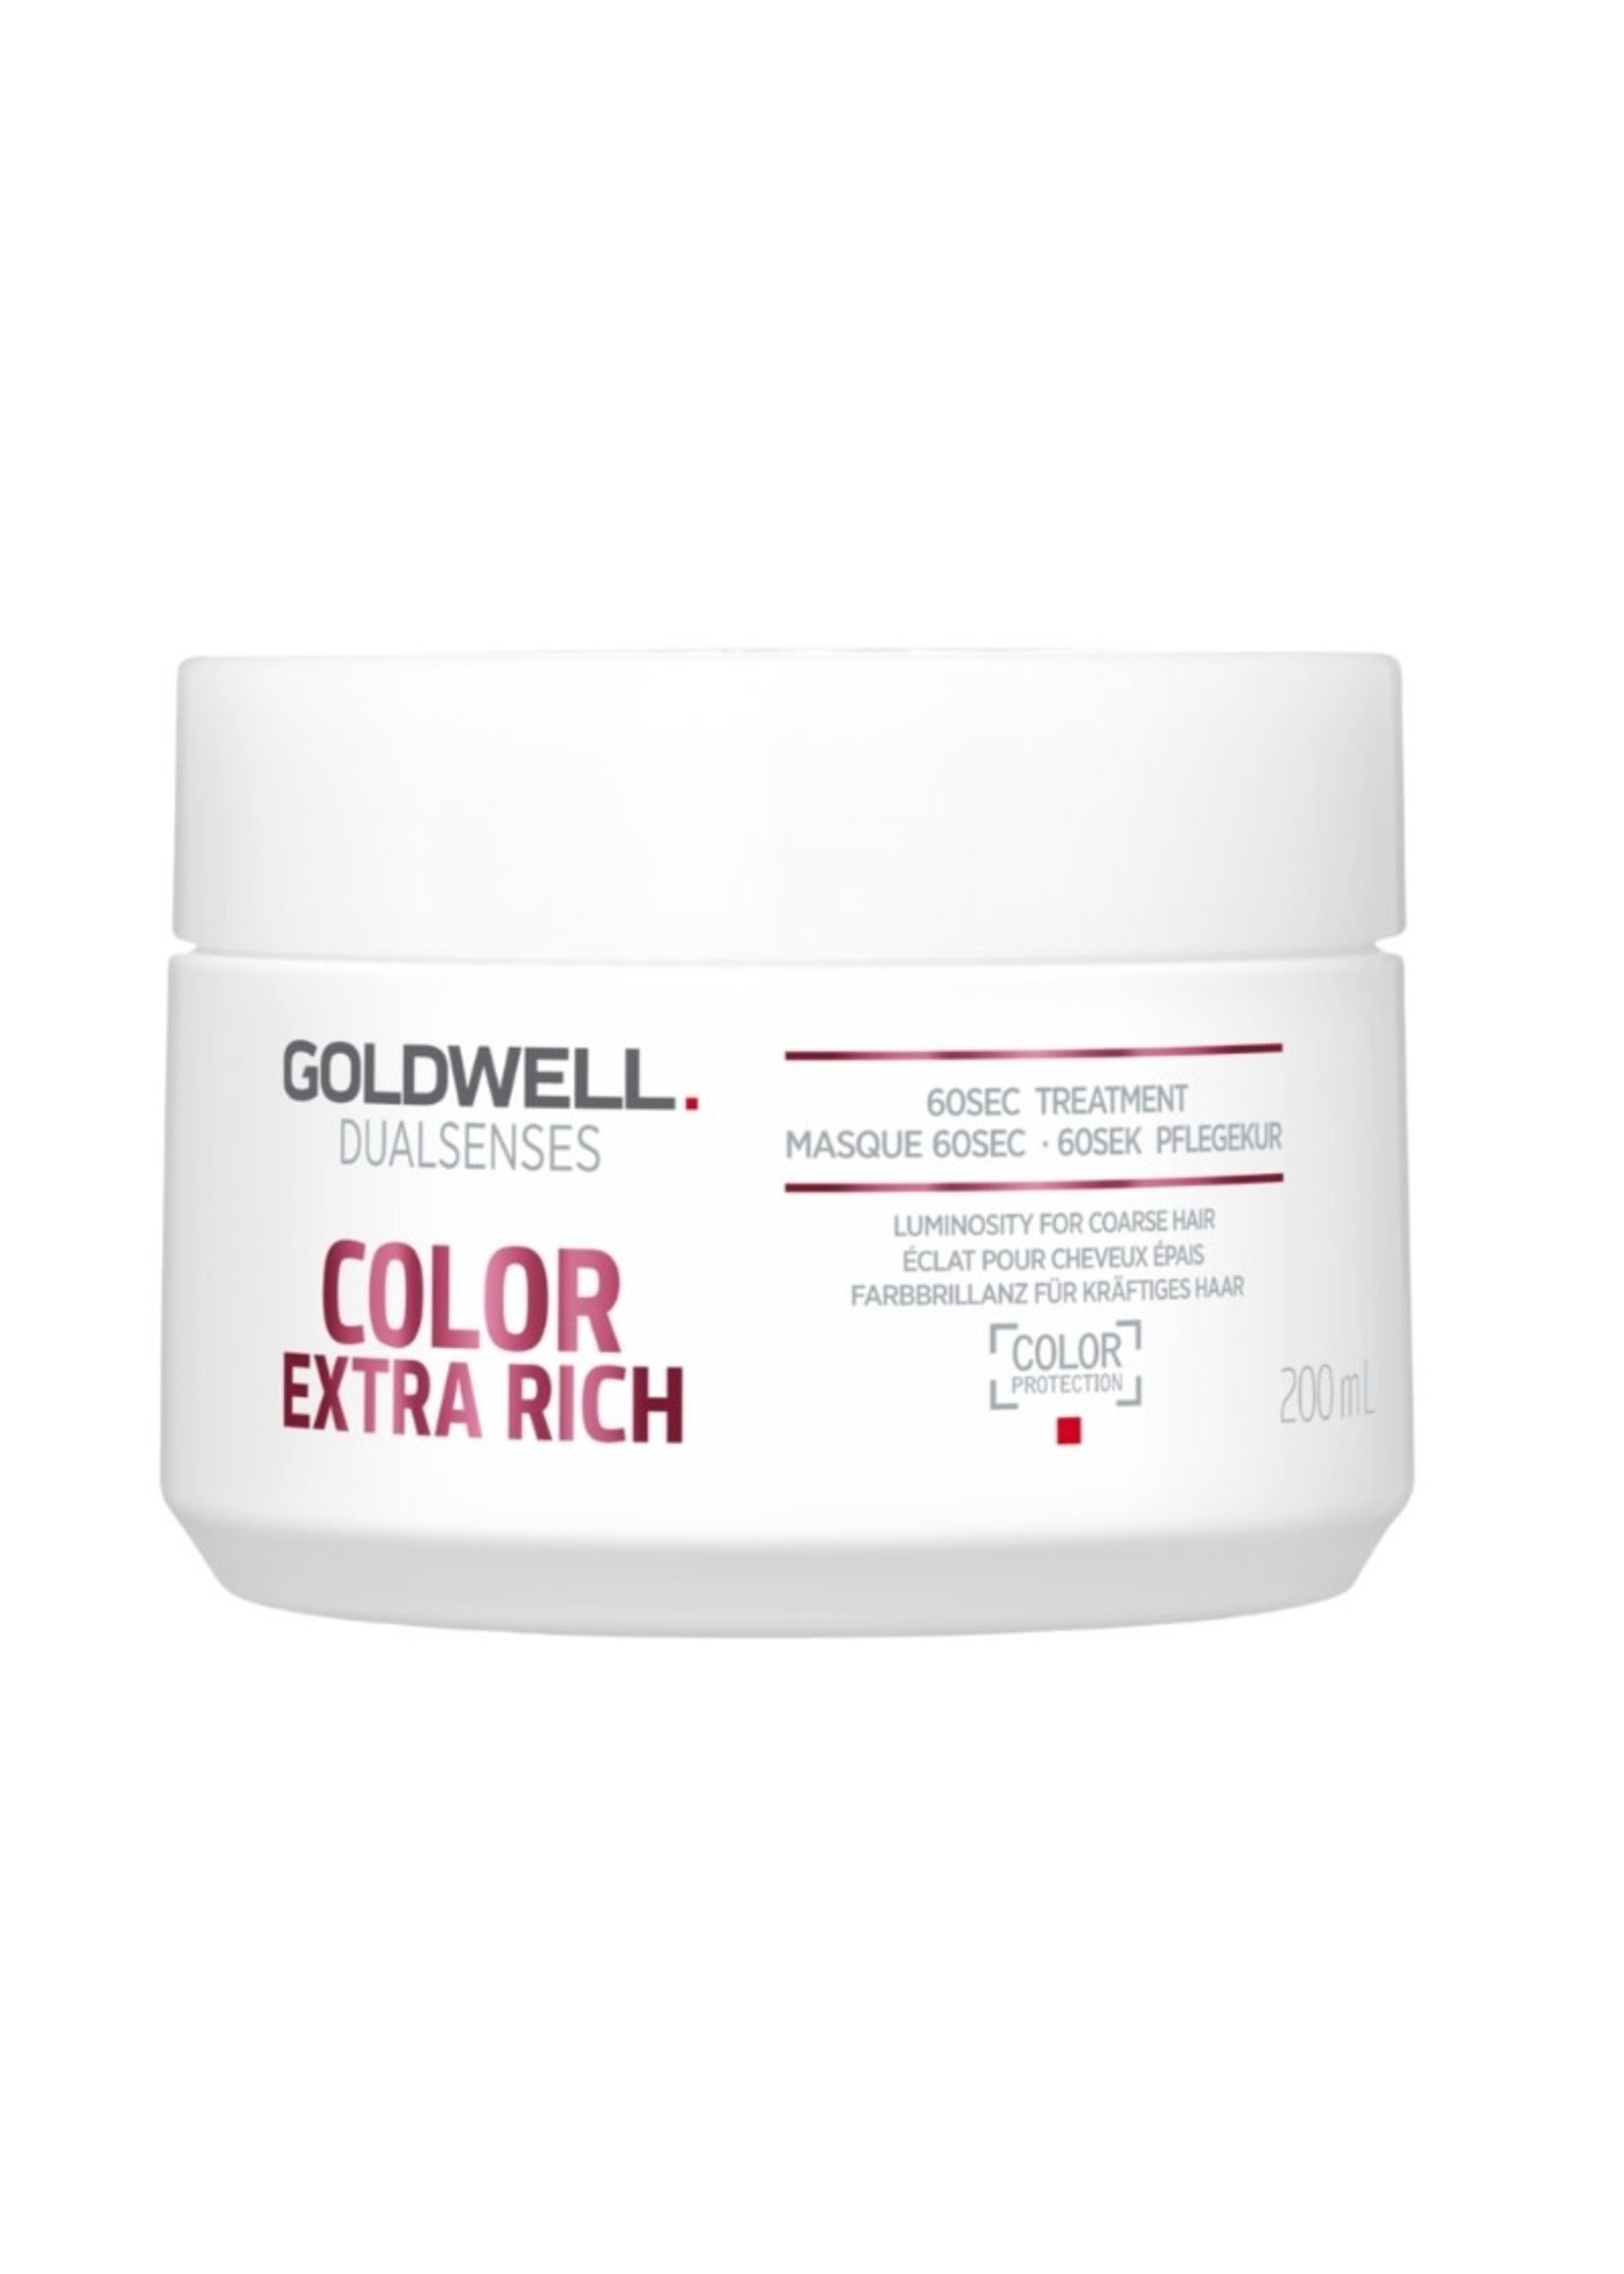 Goldwell Goldwell Dualsenses Color Extra Rich 60sec Treatment 200ml